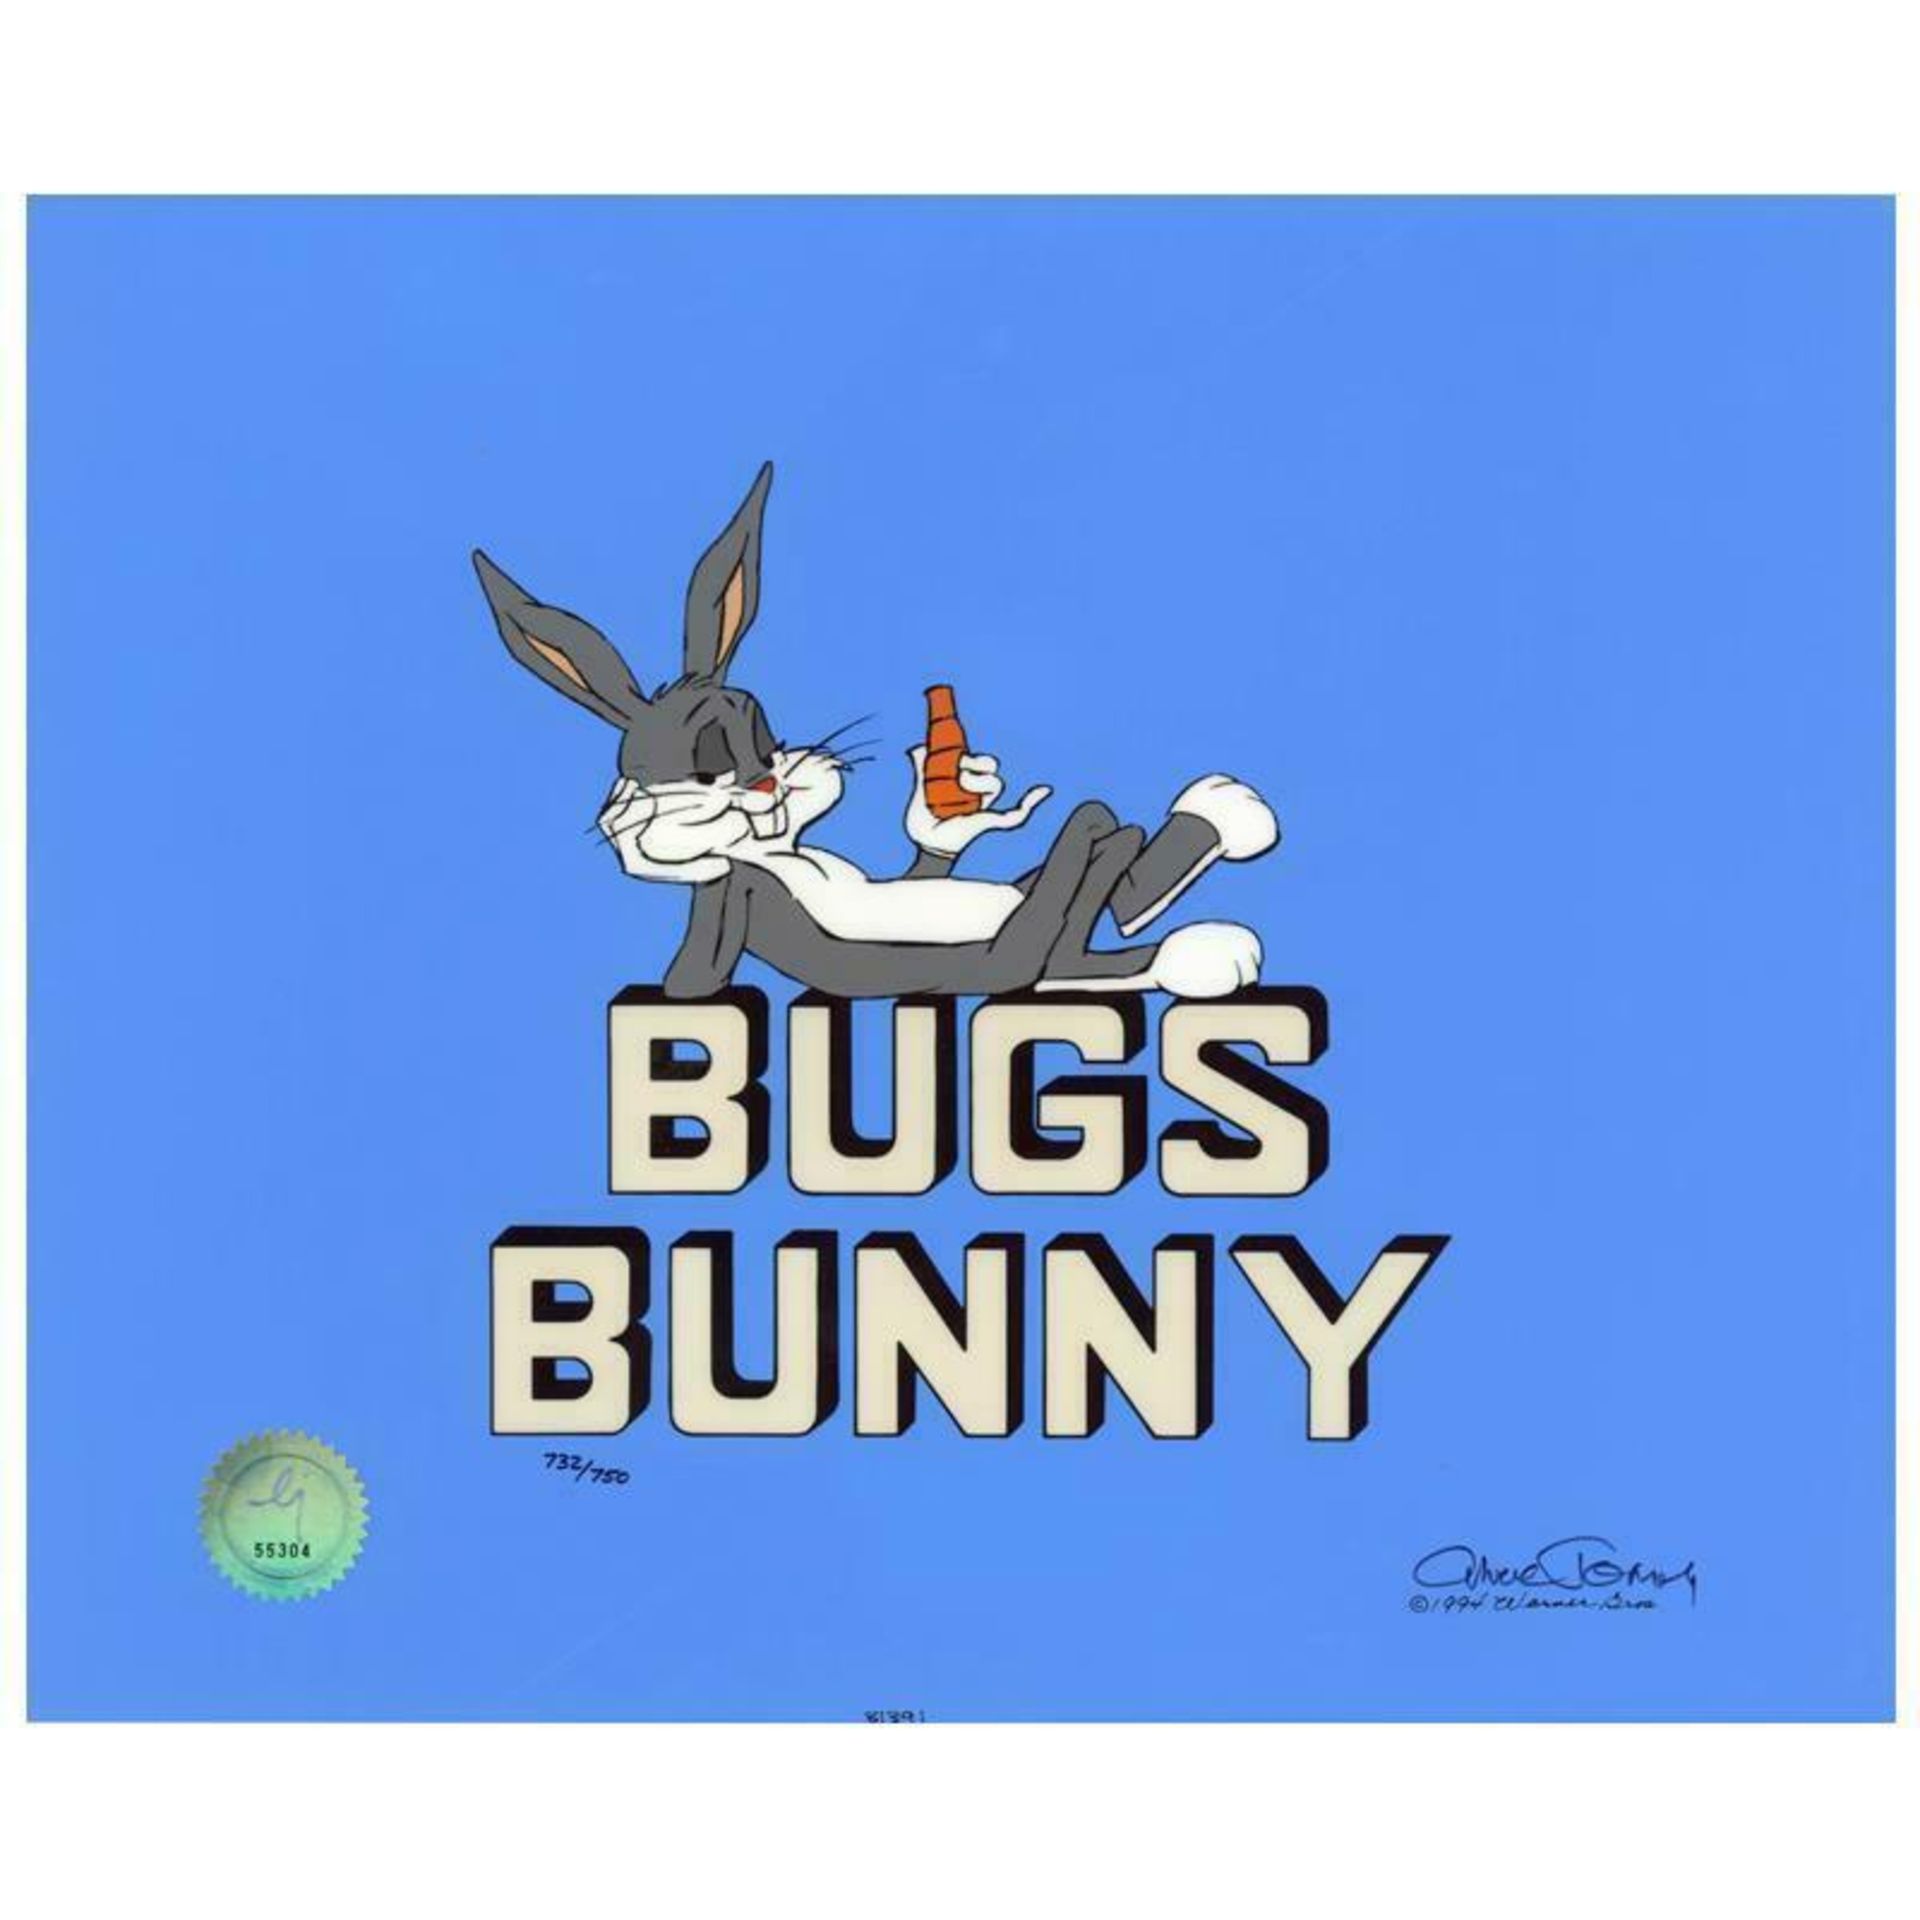 Bugs Bunny" by Chuck Jones (1912-2002)